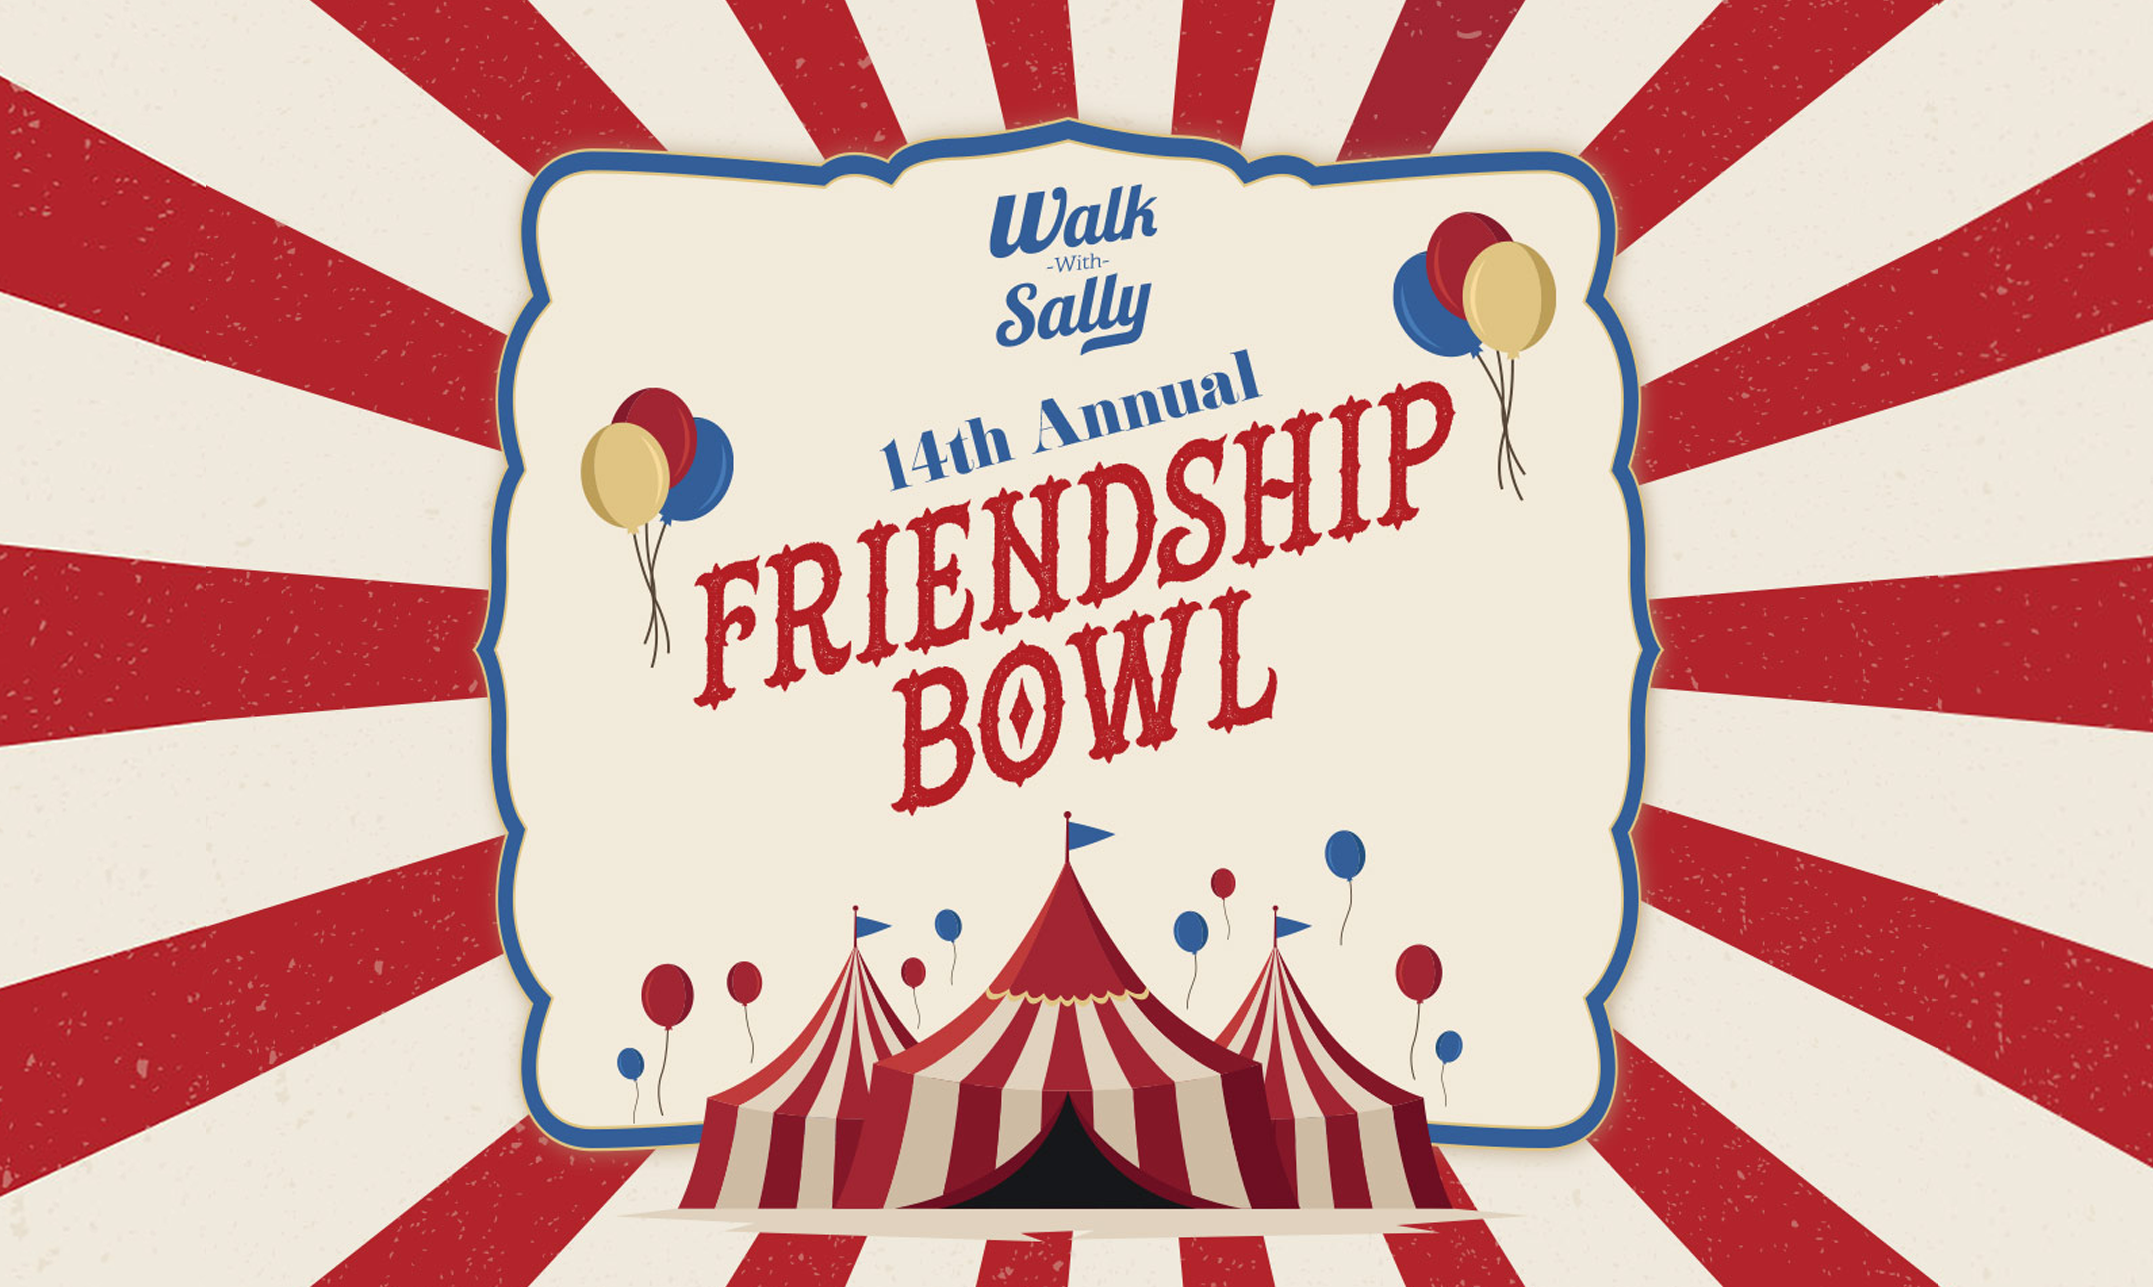 Friendship Bowl 2021